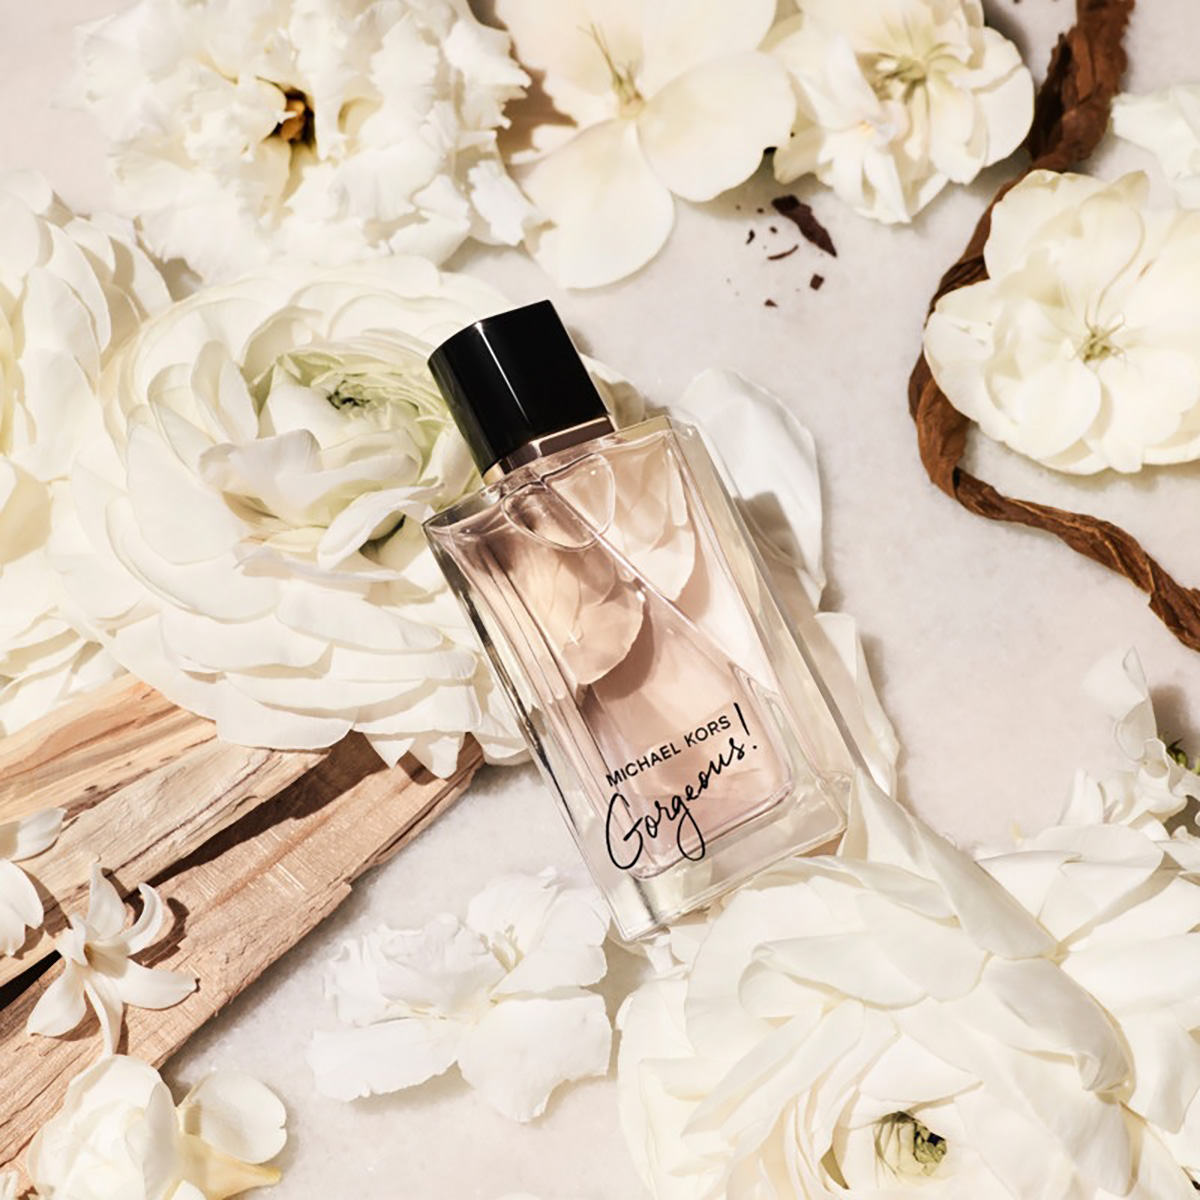 michael kors white perfume review